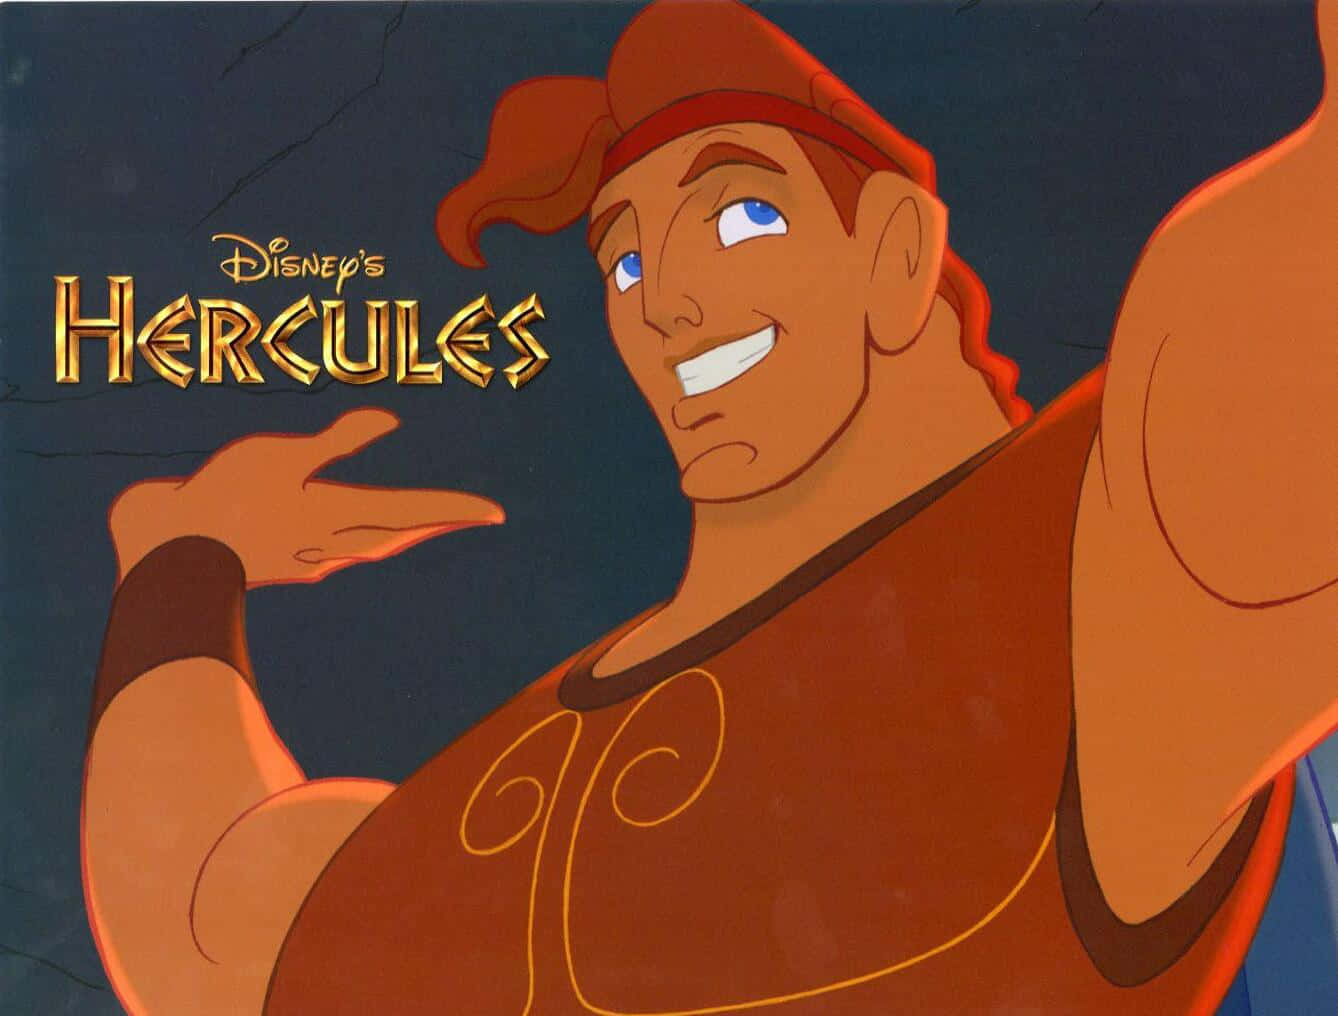 Disney's Hercules - The Movie